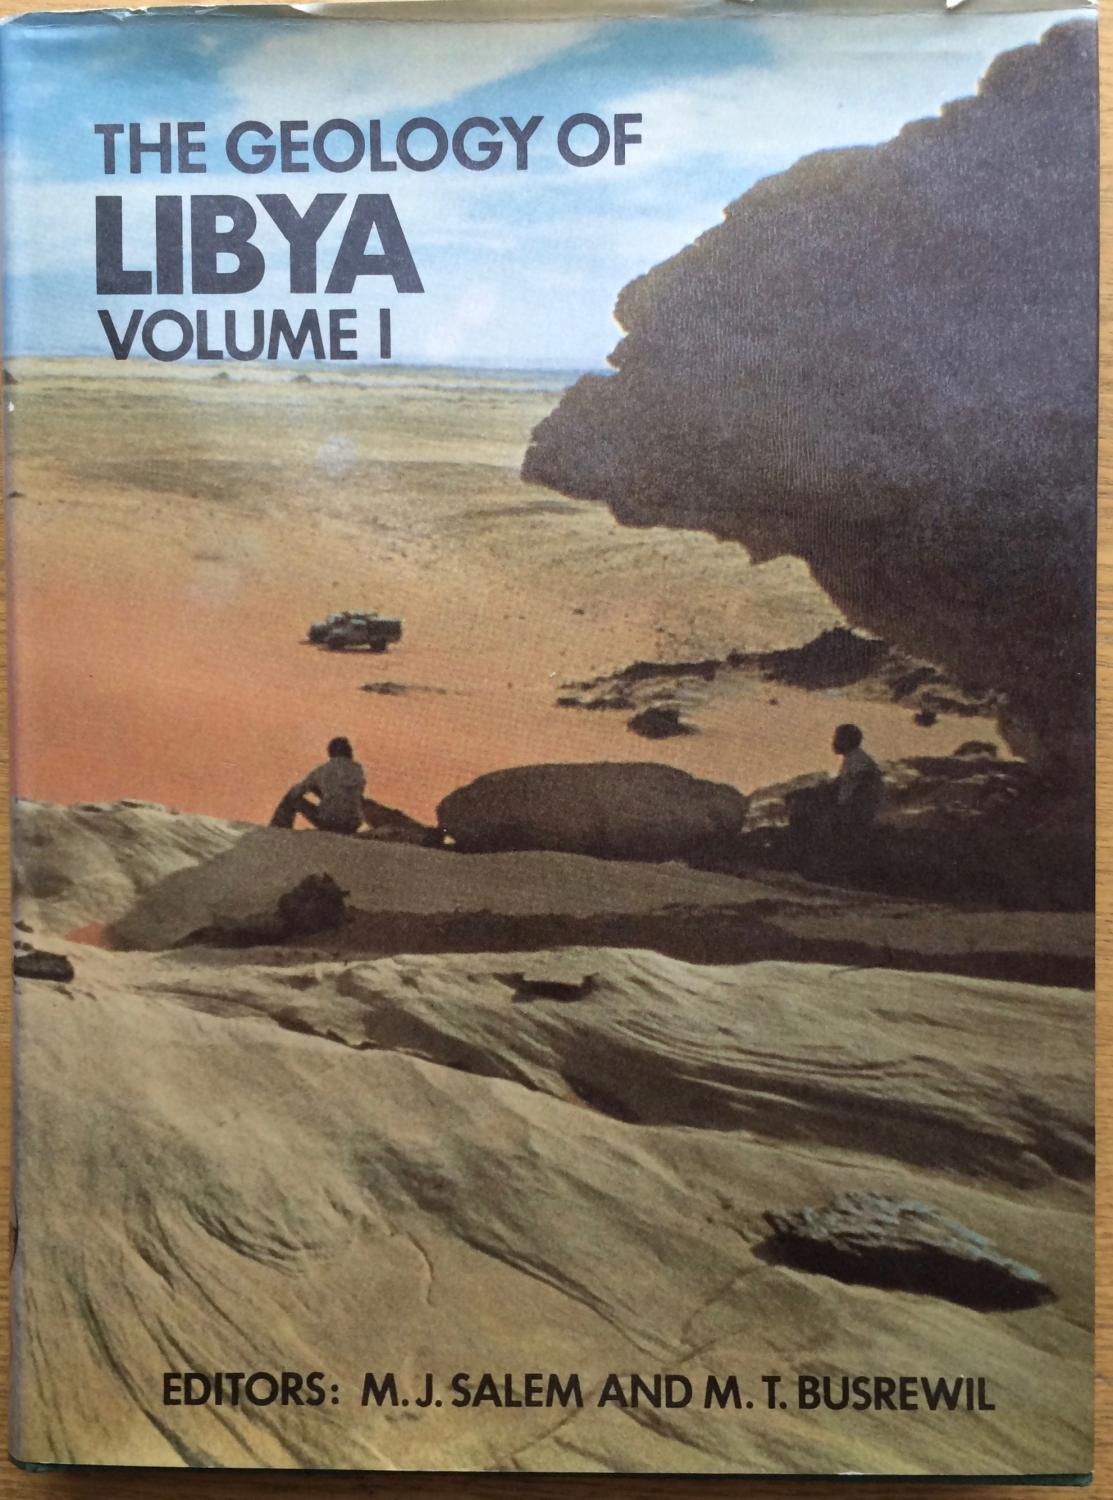 The Geology of Libya: Volume 1 [Second Symposium on the Geology of Libya, held at Tripoli, September 16-21 1978] - M. J. Salem, M. T. Busrewil